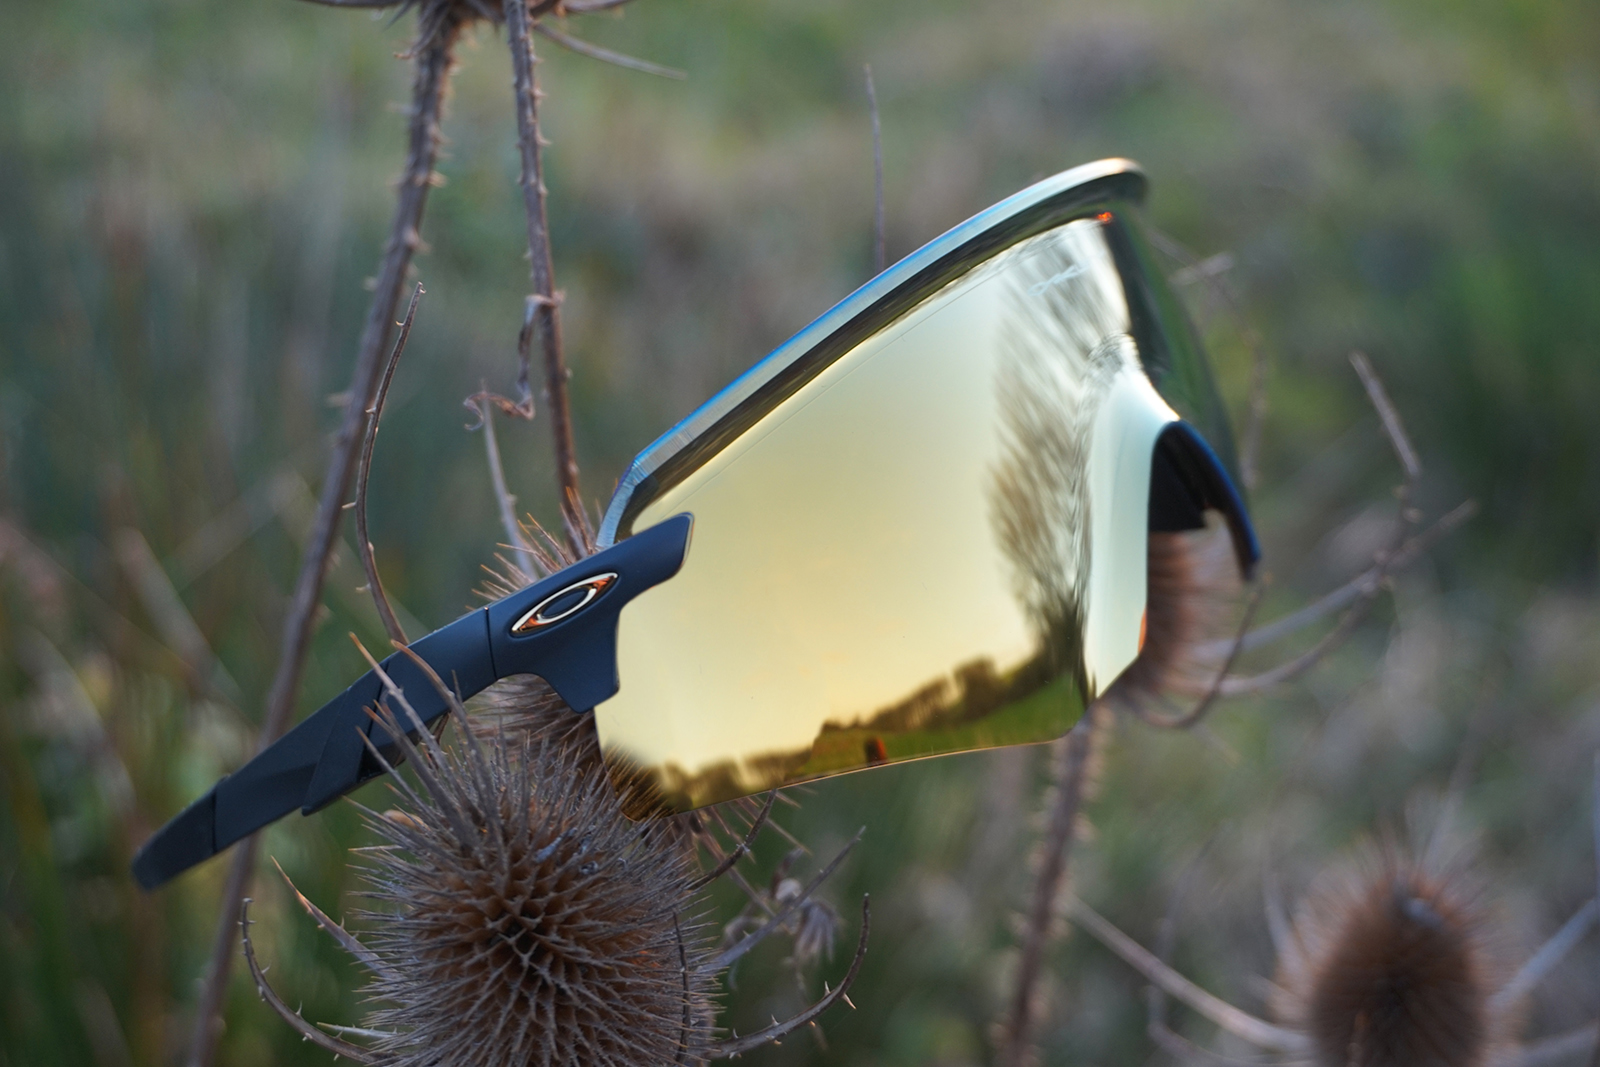 Men Eyeglasses | LensCrafters®: Prescription Eyewear & Contact Lenses